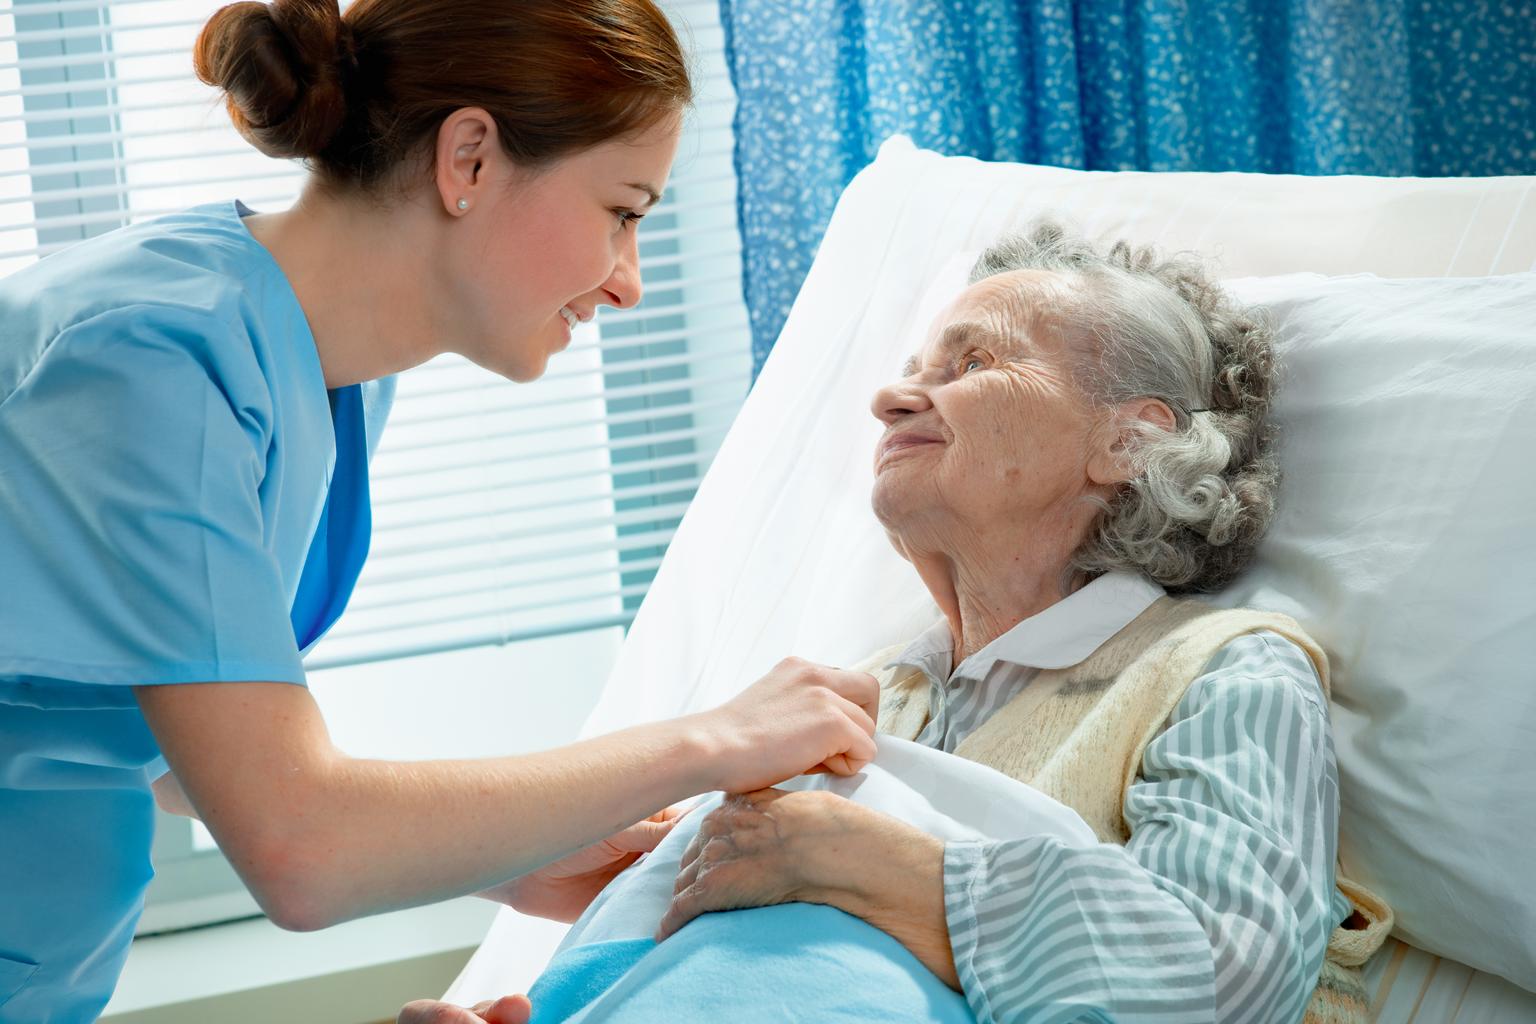 A nurse leans over patient bedside to take care of senior patient